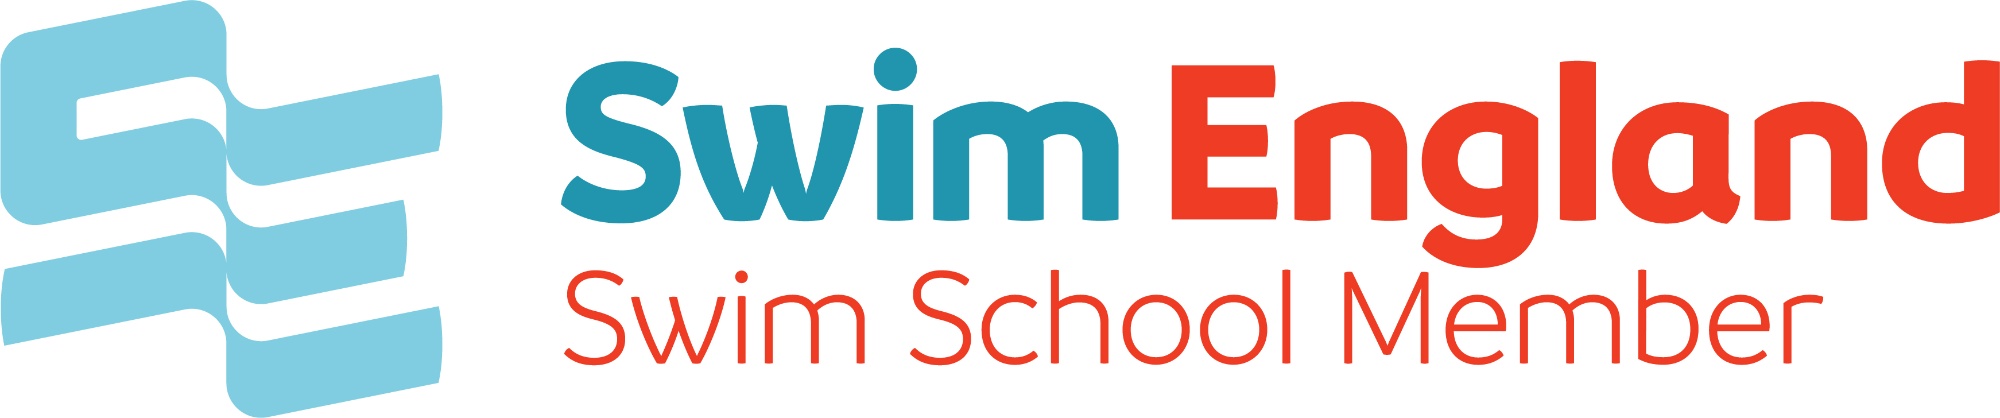 Image of Swim England logo